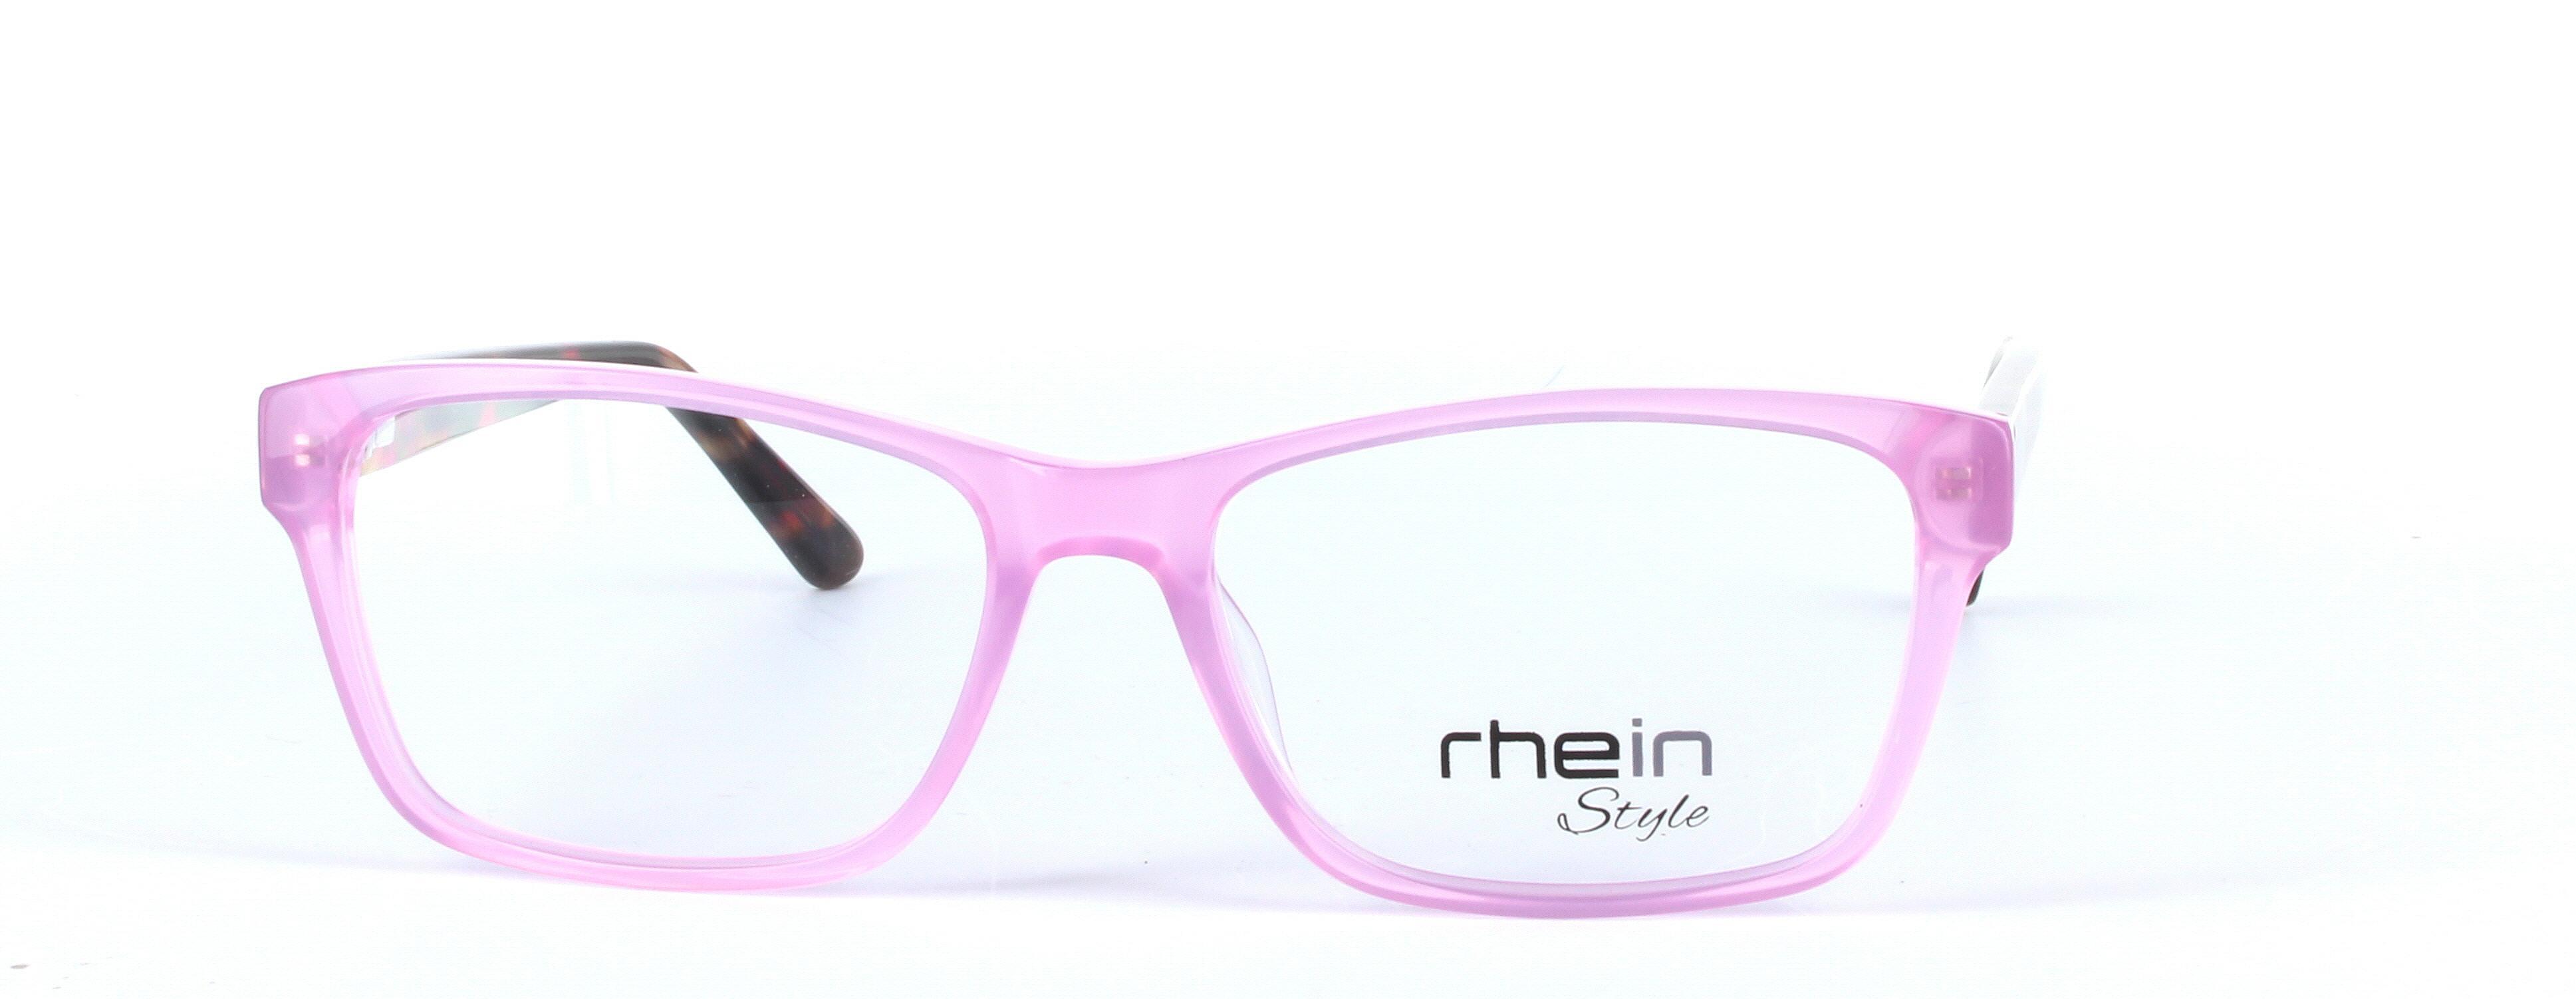 Benji Pink Full Rim Oval Round Plastic Glasses - Image View 5